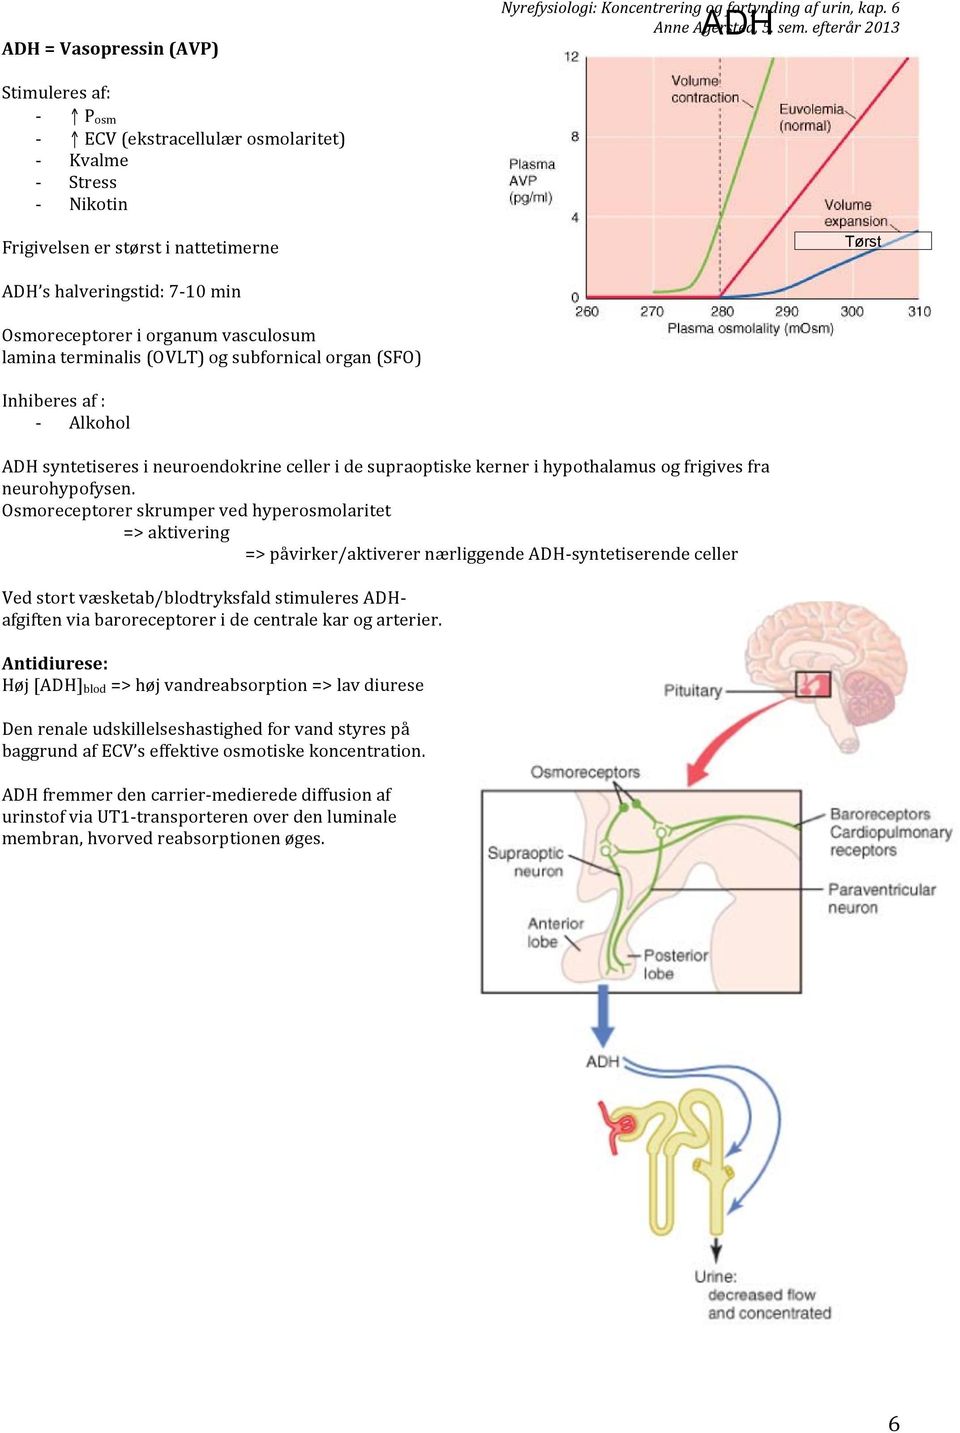 lamina terminalis (OVLT) og subfornical organ (SFO) Inhiberes af : - Alkohol ADH syntetiseres i neuroendokrine celler i de supraoptiske kerner i hypothalamus og frigives fra neurohypofysen.